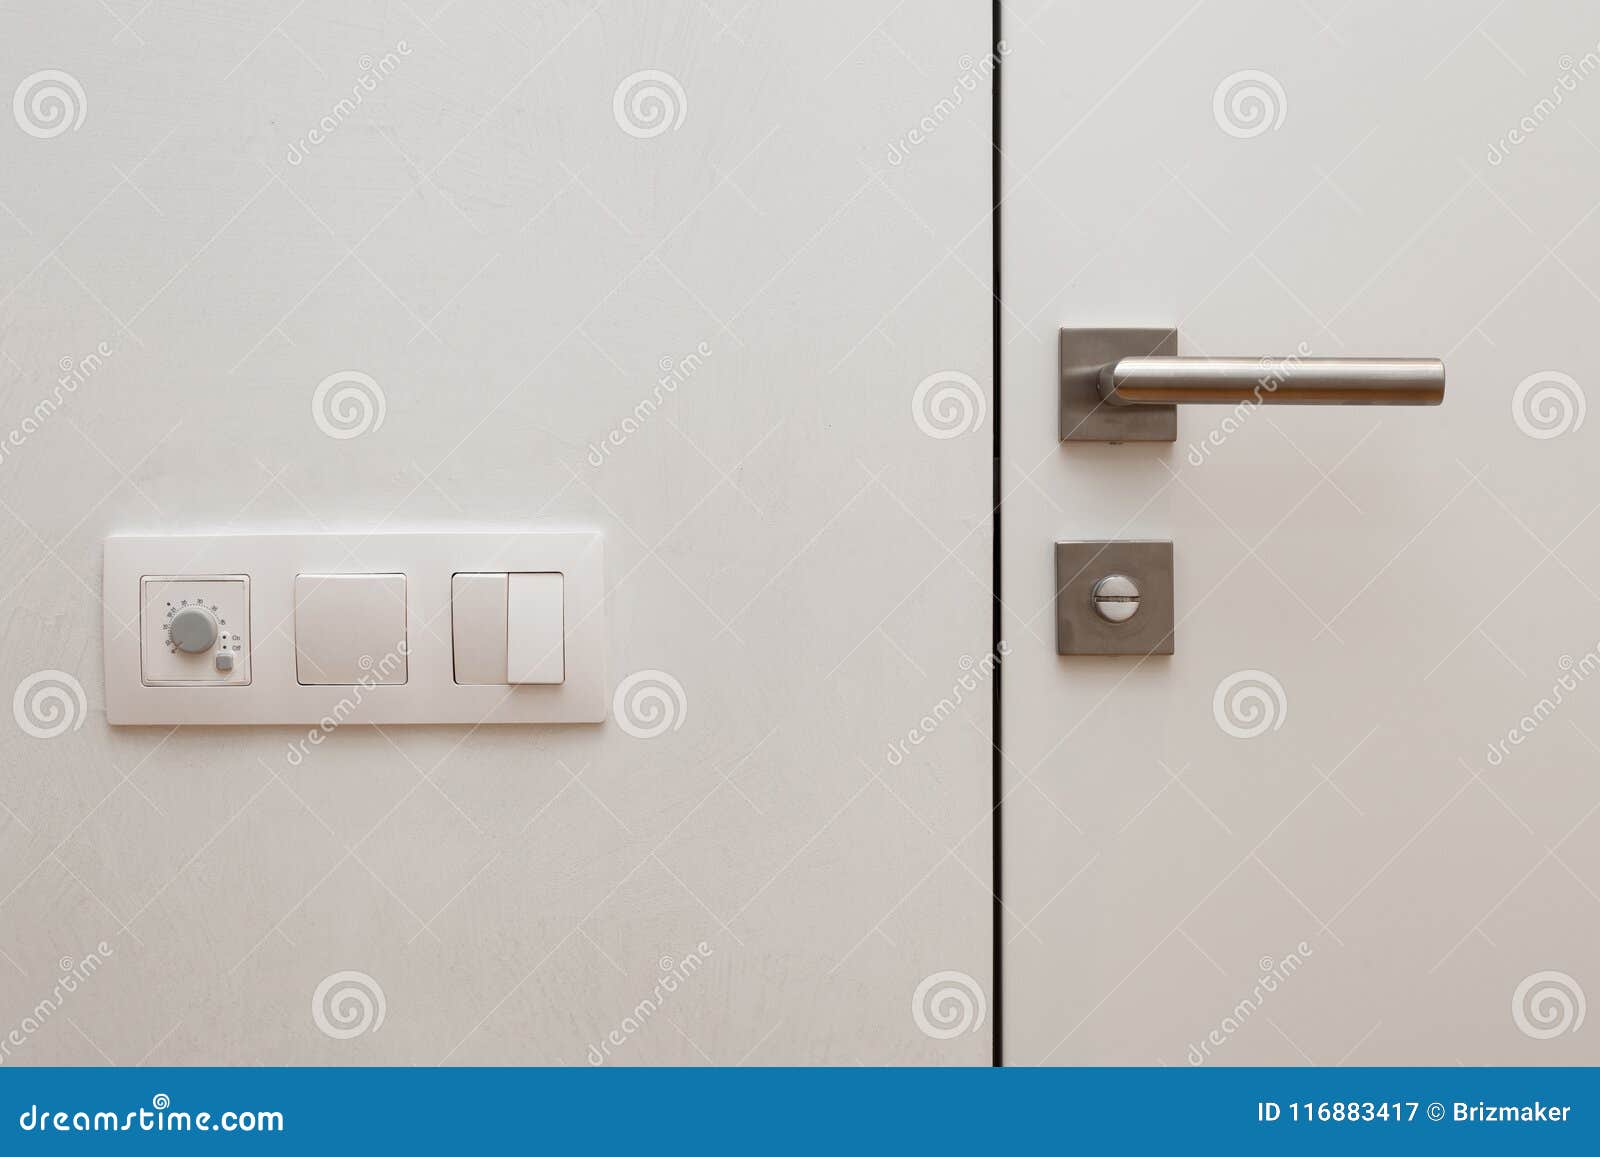 the white door switch